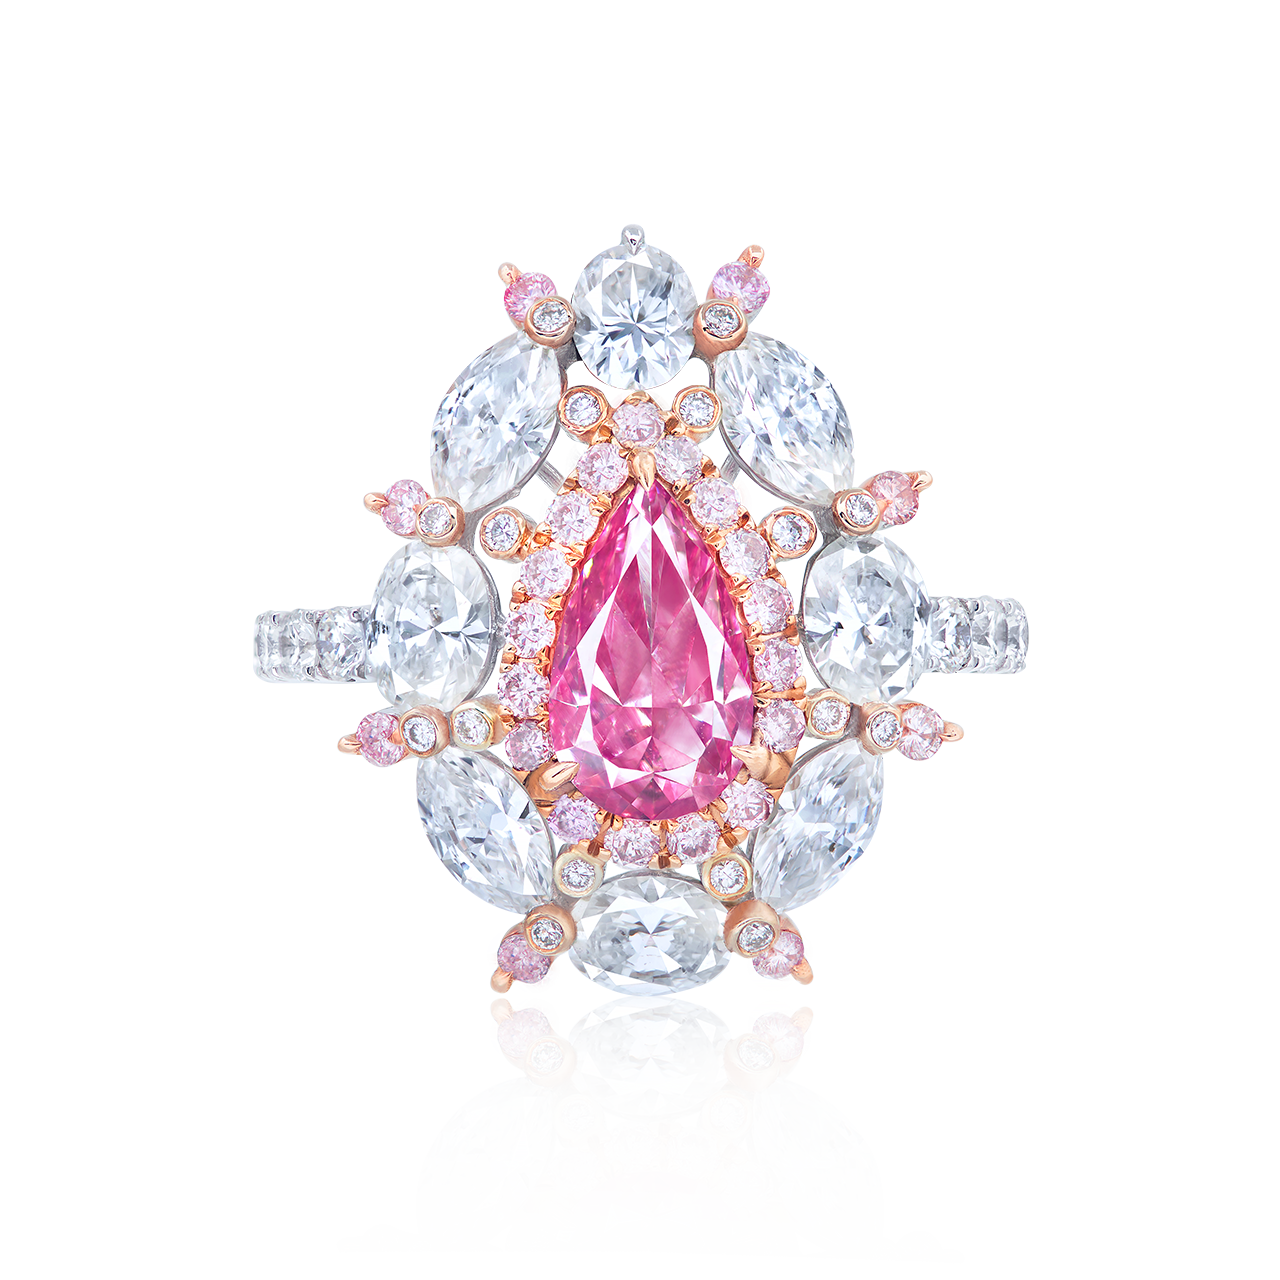 GIA 1.03克拉 艷彩紫粉鑽鑽戒
Fancy Vivid Purplish Pink Colored 
Diamond and Diamond Ring